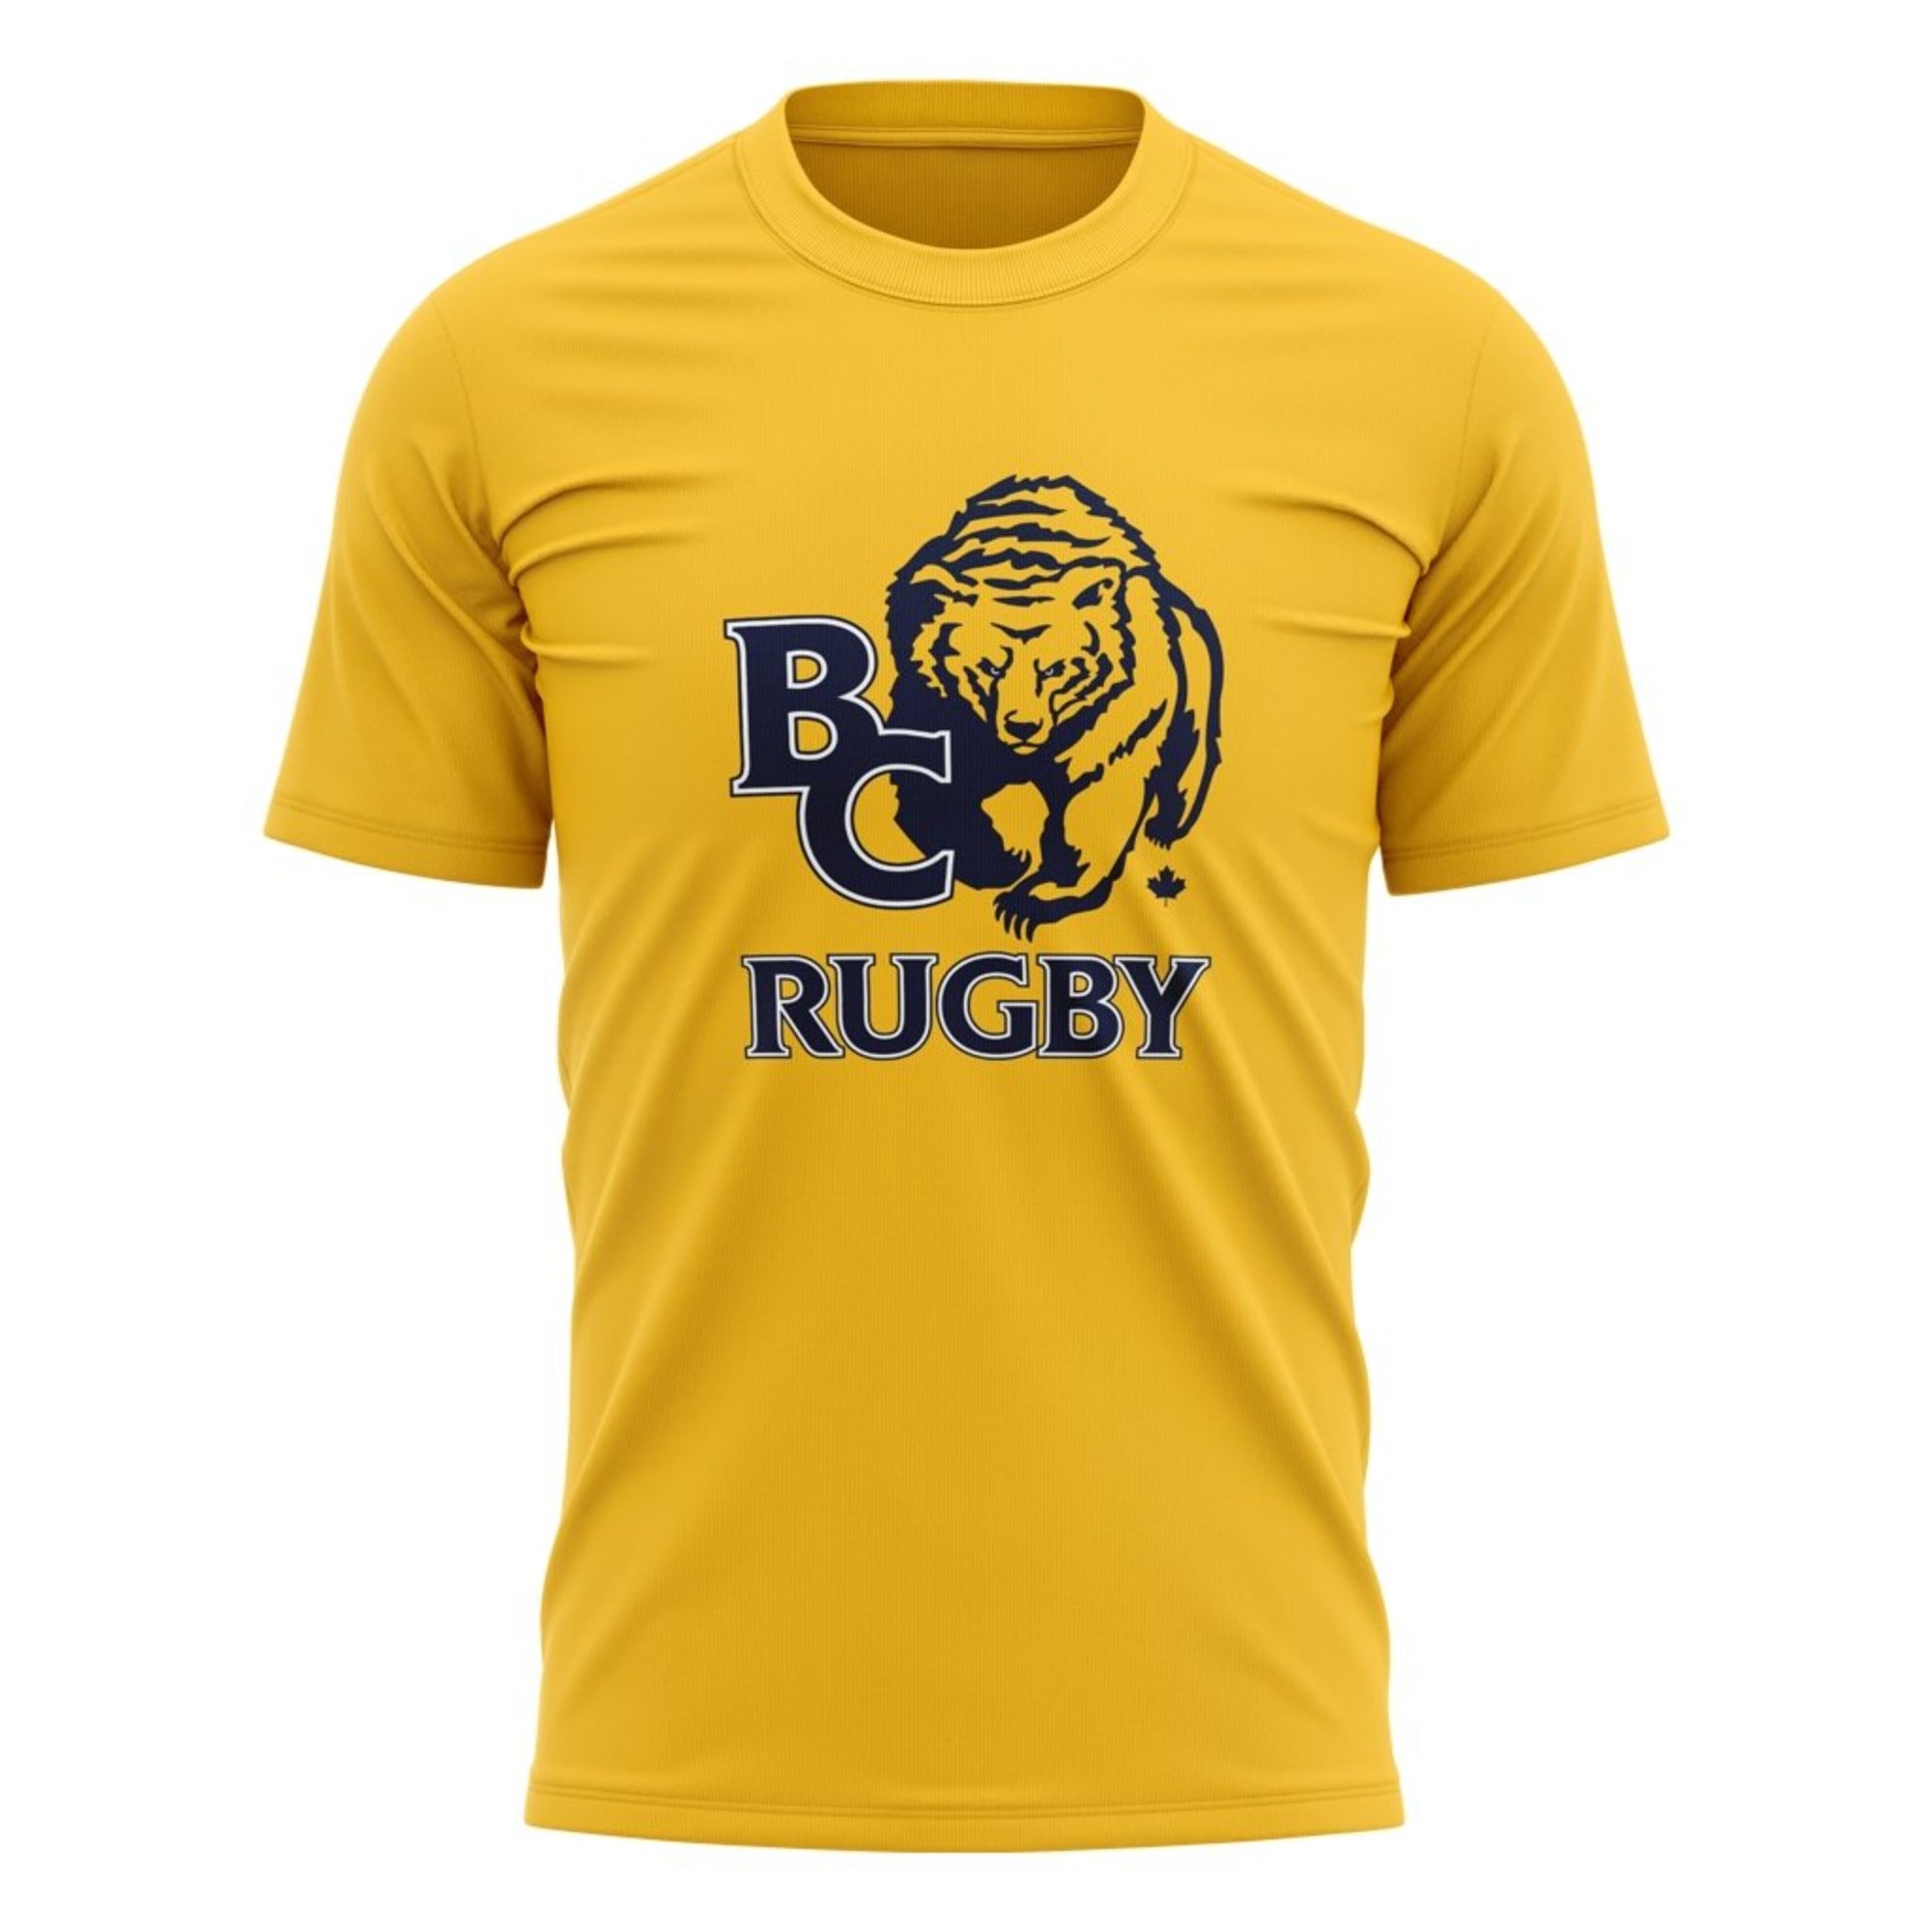 BC Rugby 2021 "Team" Tee - Men's Navy/Grey/White/Gold - www.therugbyshop.com www.therugbyshop.com MEN'S / NAVY / S XIX Brands TEES BC Rugby 2021 "Team" Tee - Men's Navy/Grey/White/Gold